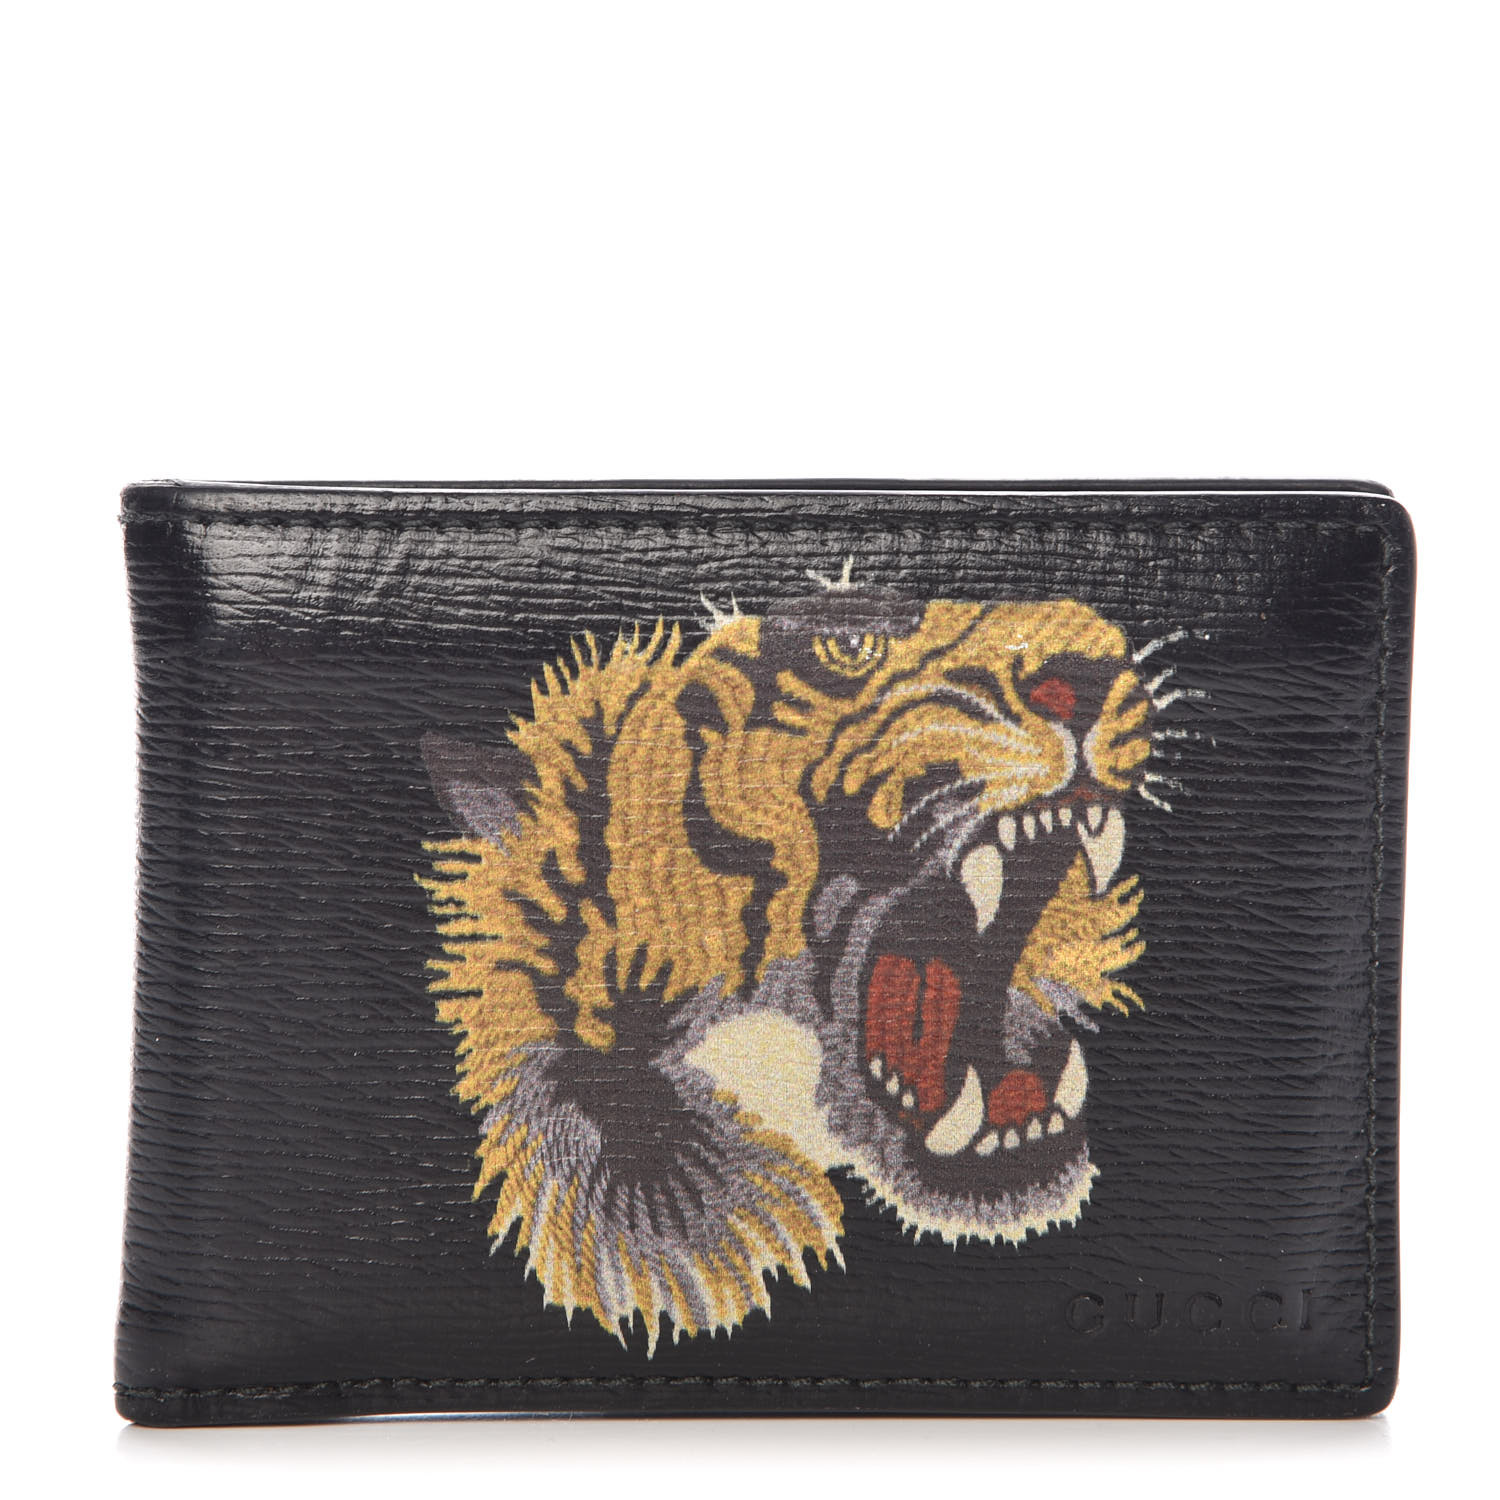 gucci wallet lion, OFF 74%,www 